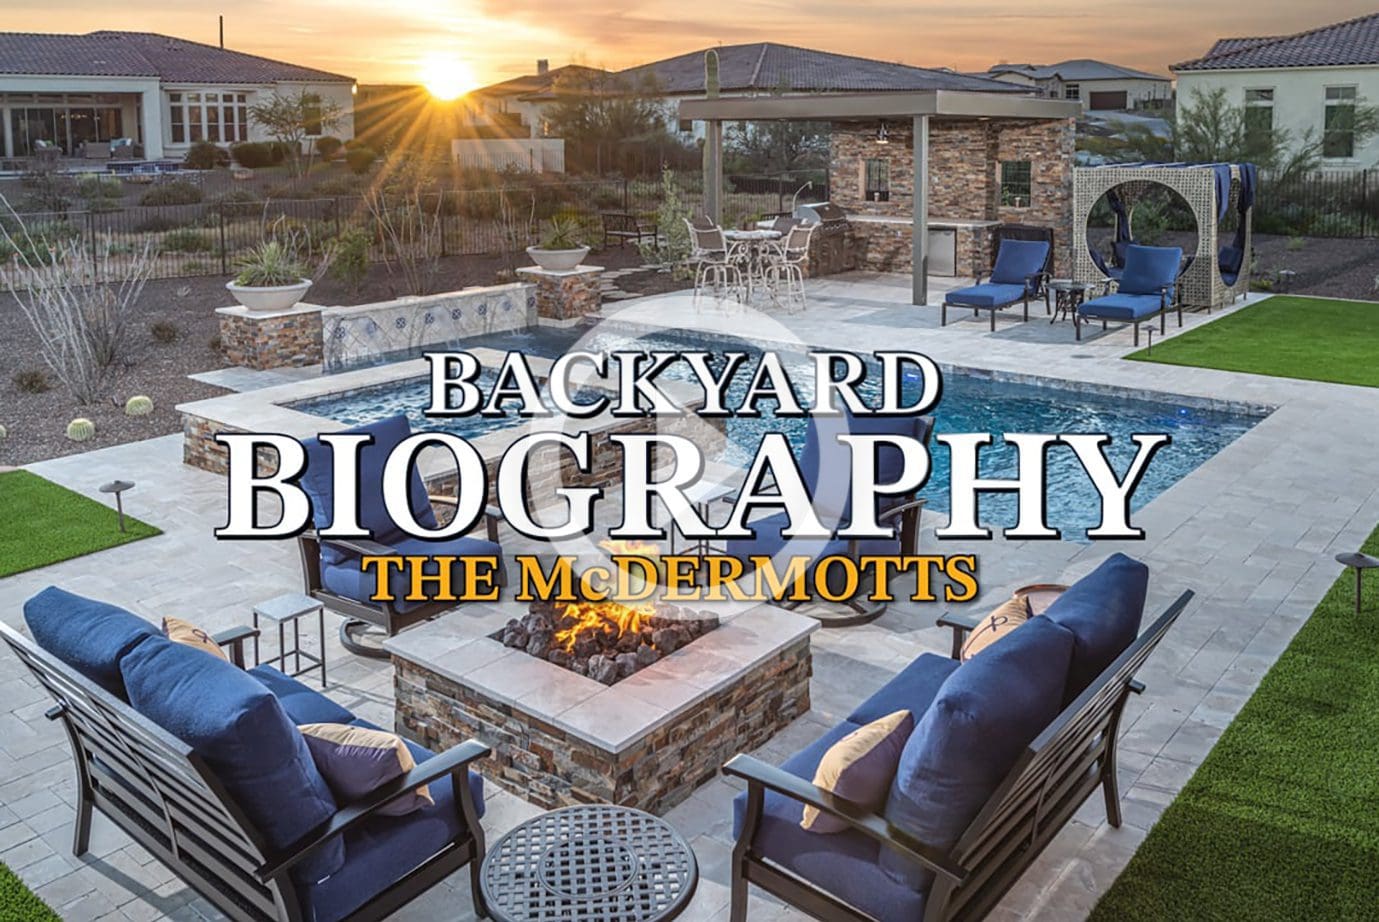 Backyard Biography: The McDermotts